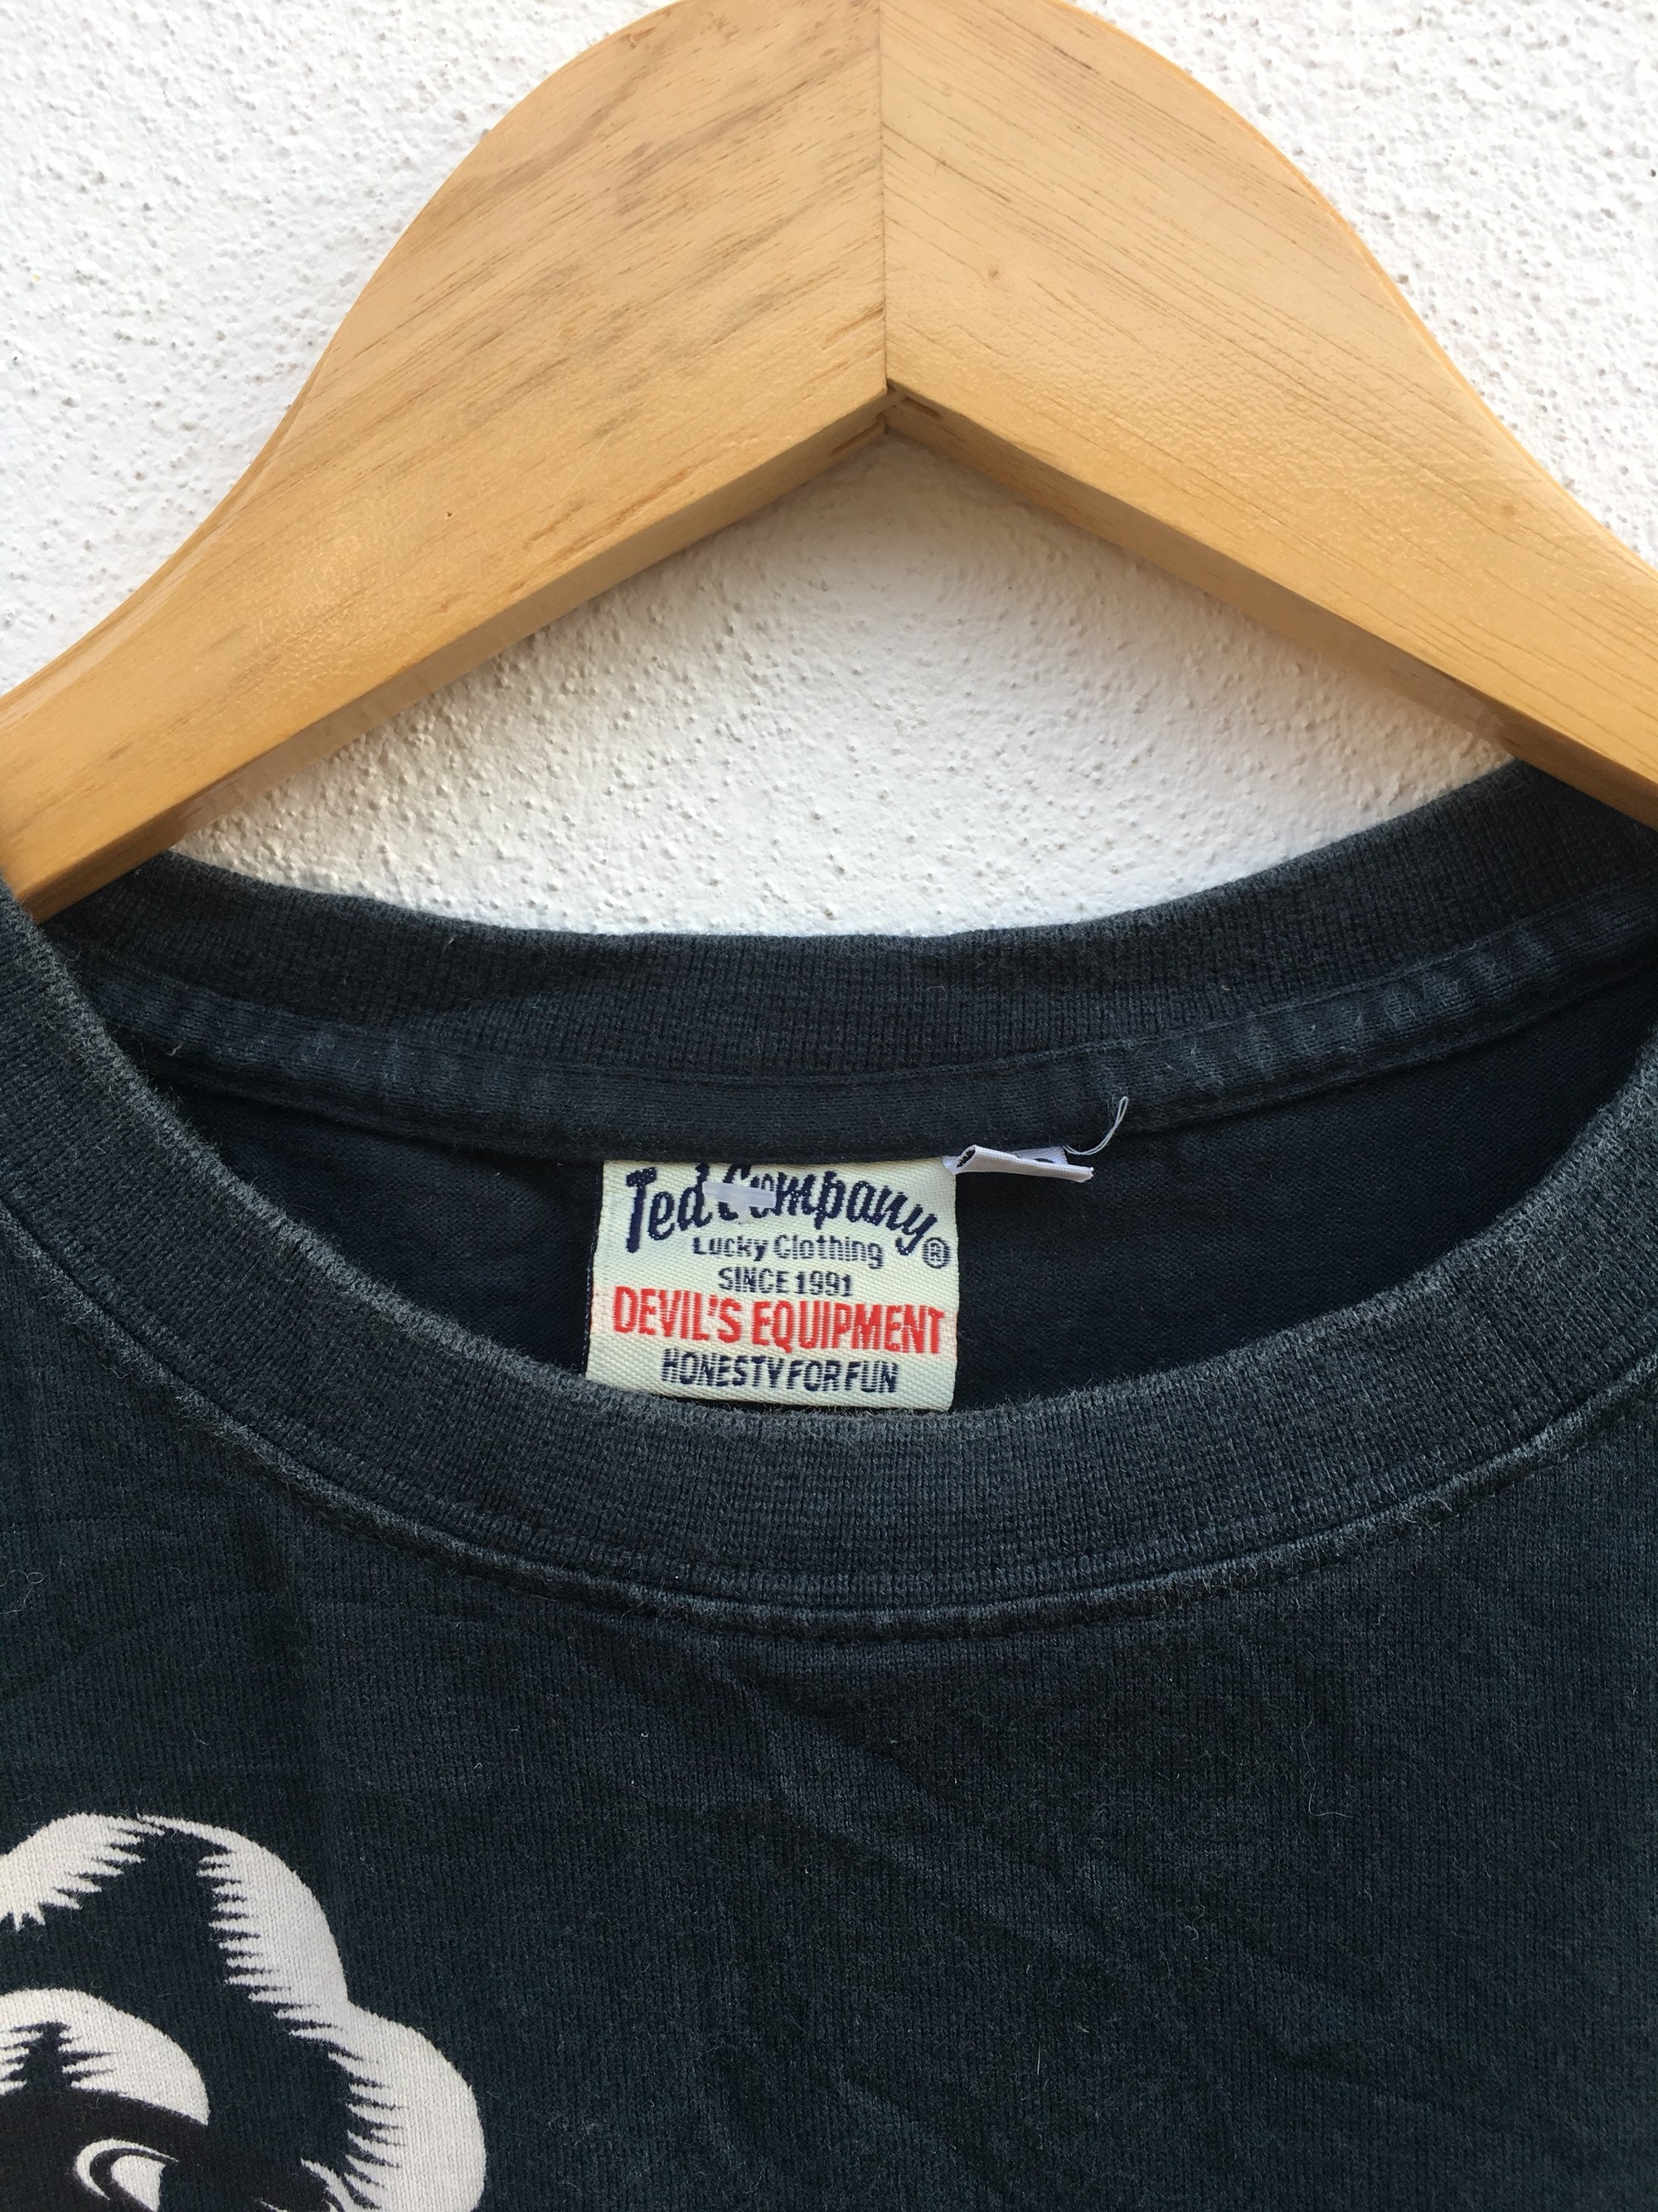 Rare Tedmans by Ted company Shirt Rare design | Etsy